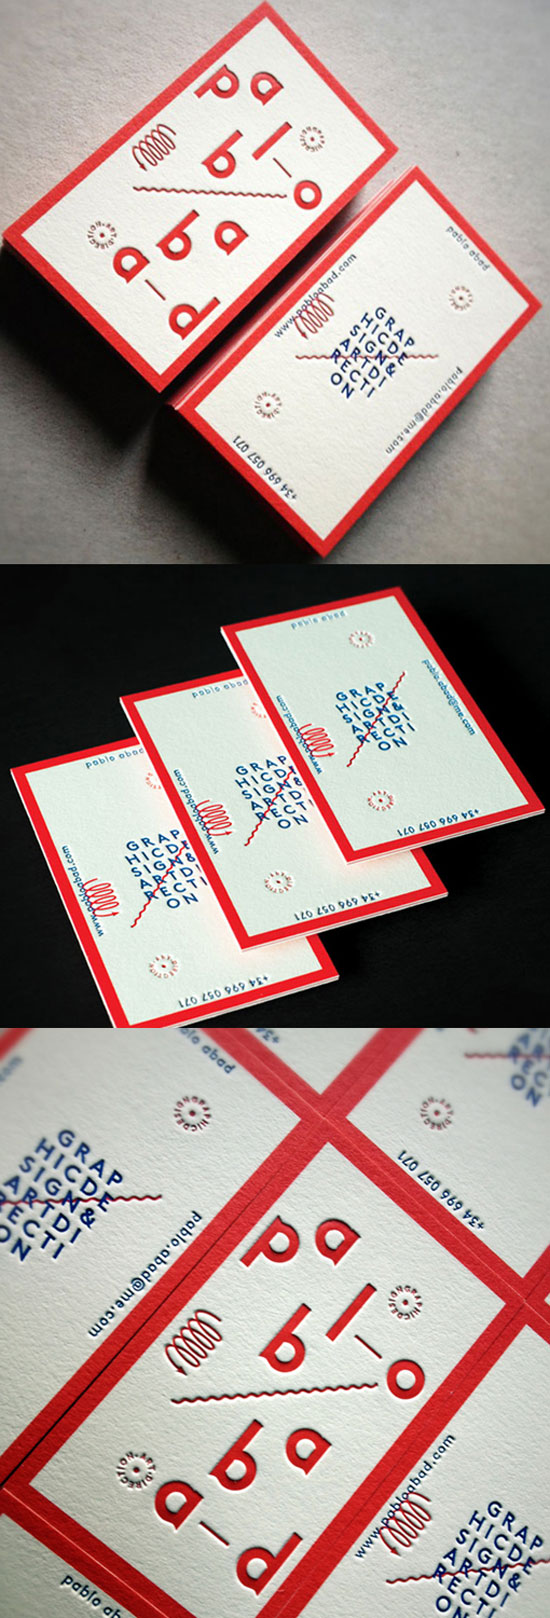 Pablo Abad Business Card design Inspiration